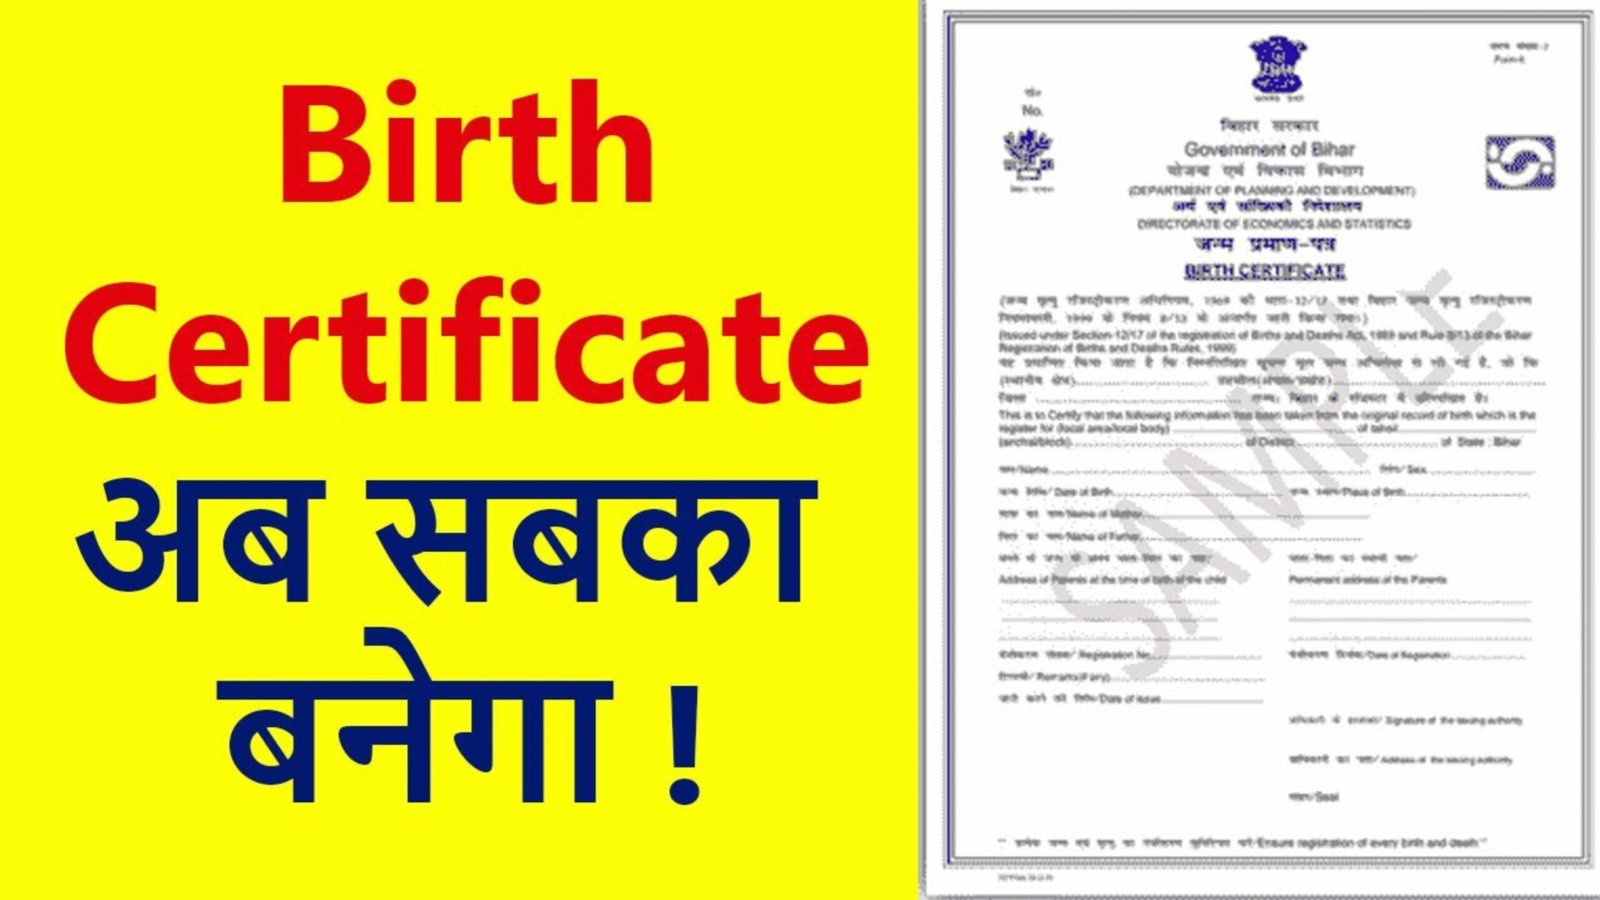 Birth Certificate Apply Online